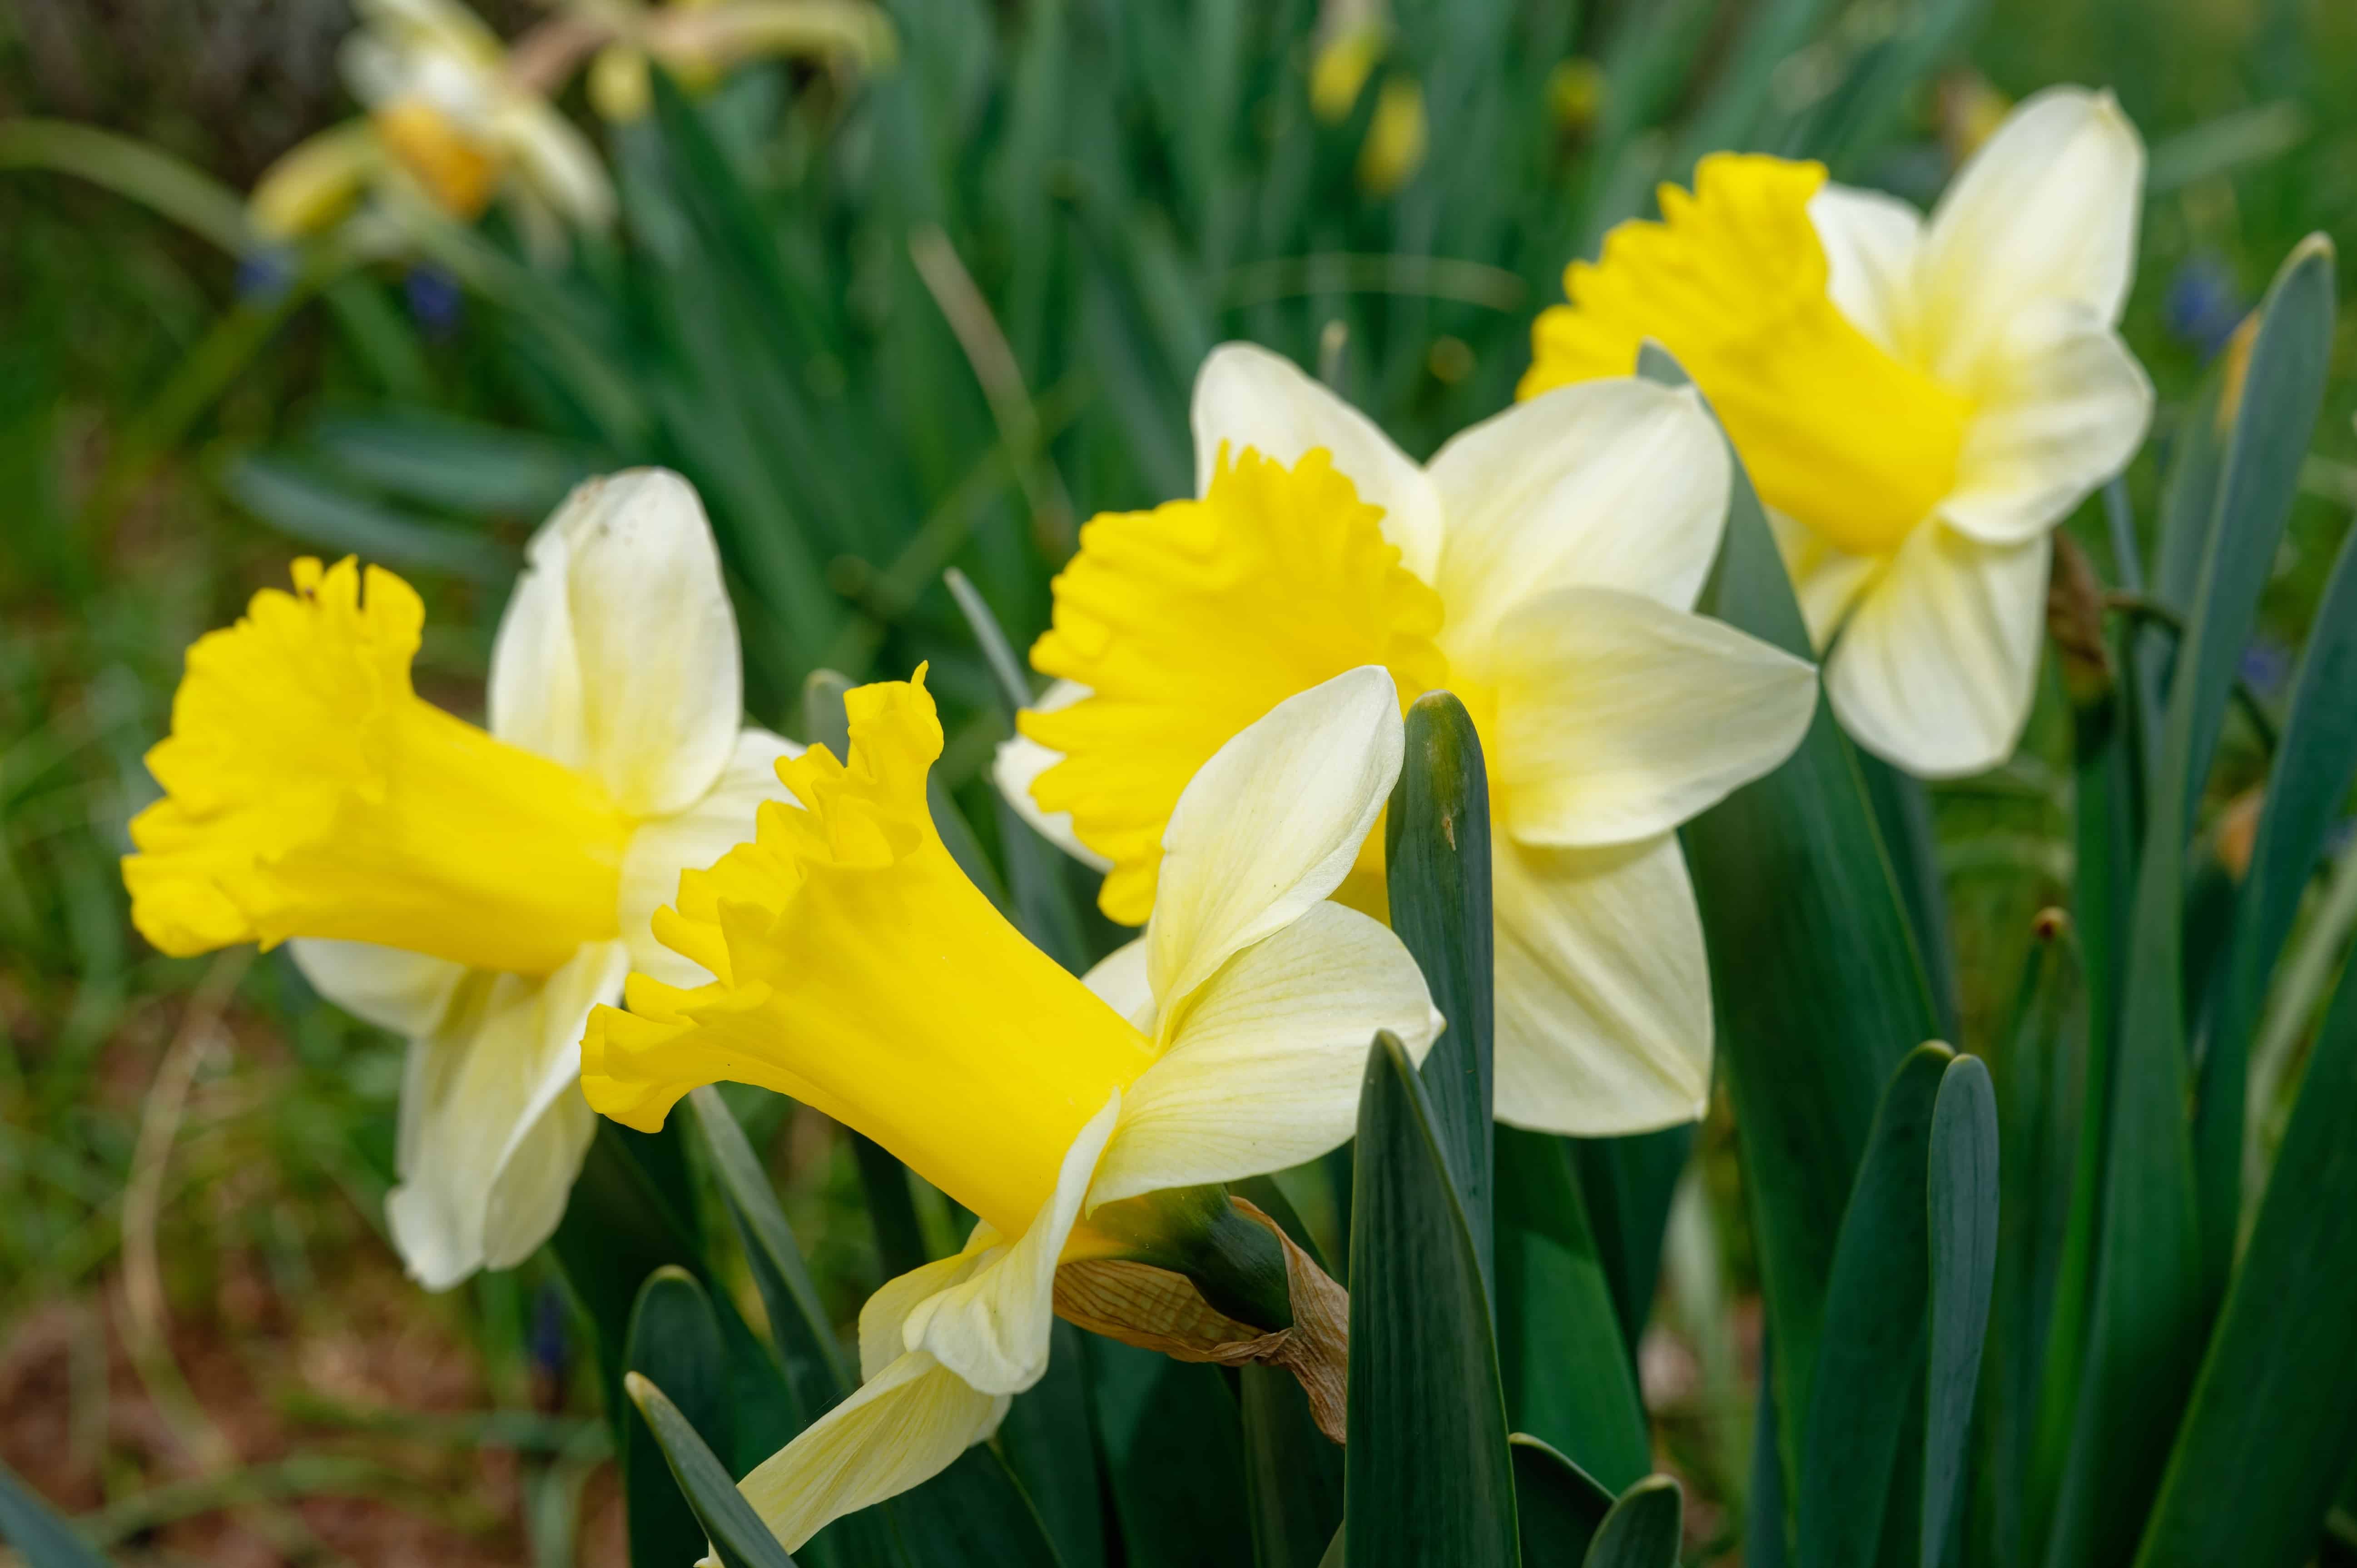 'Goblet' Trumpet Daffodil